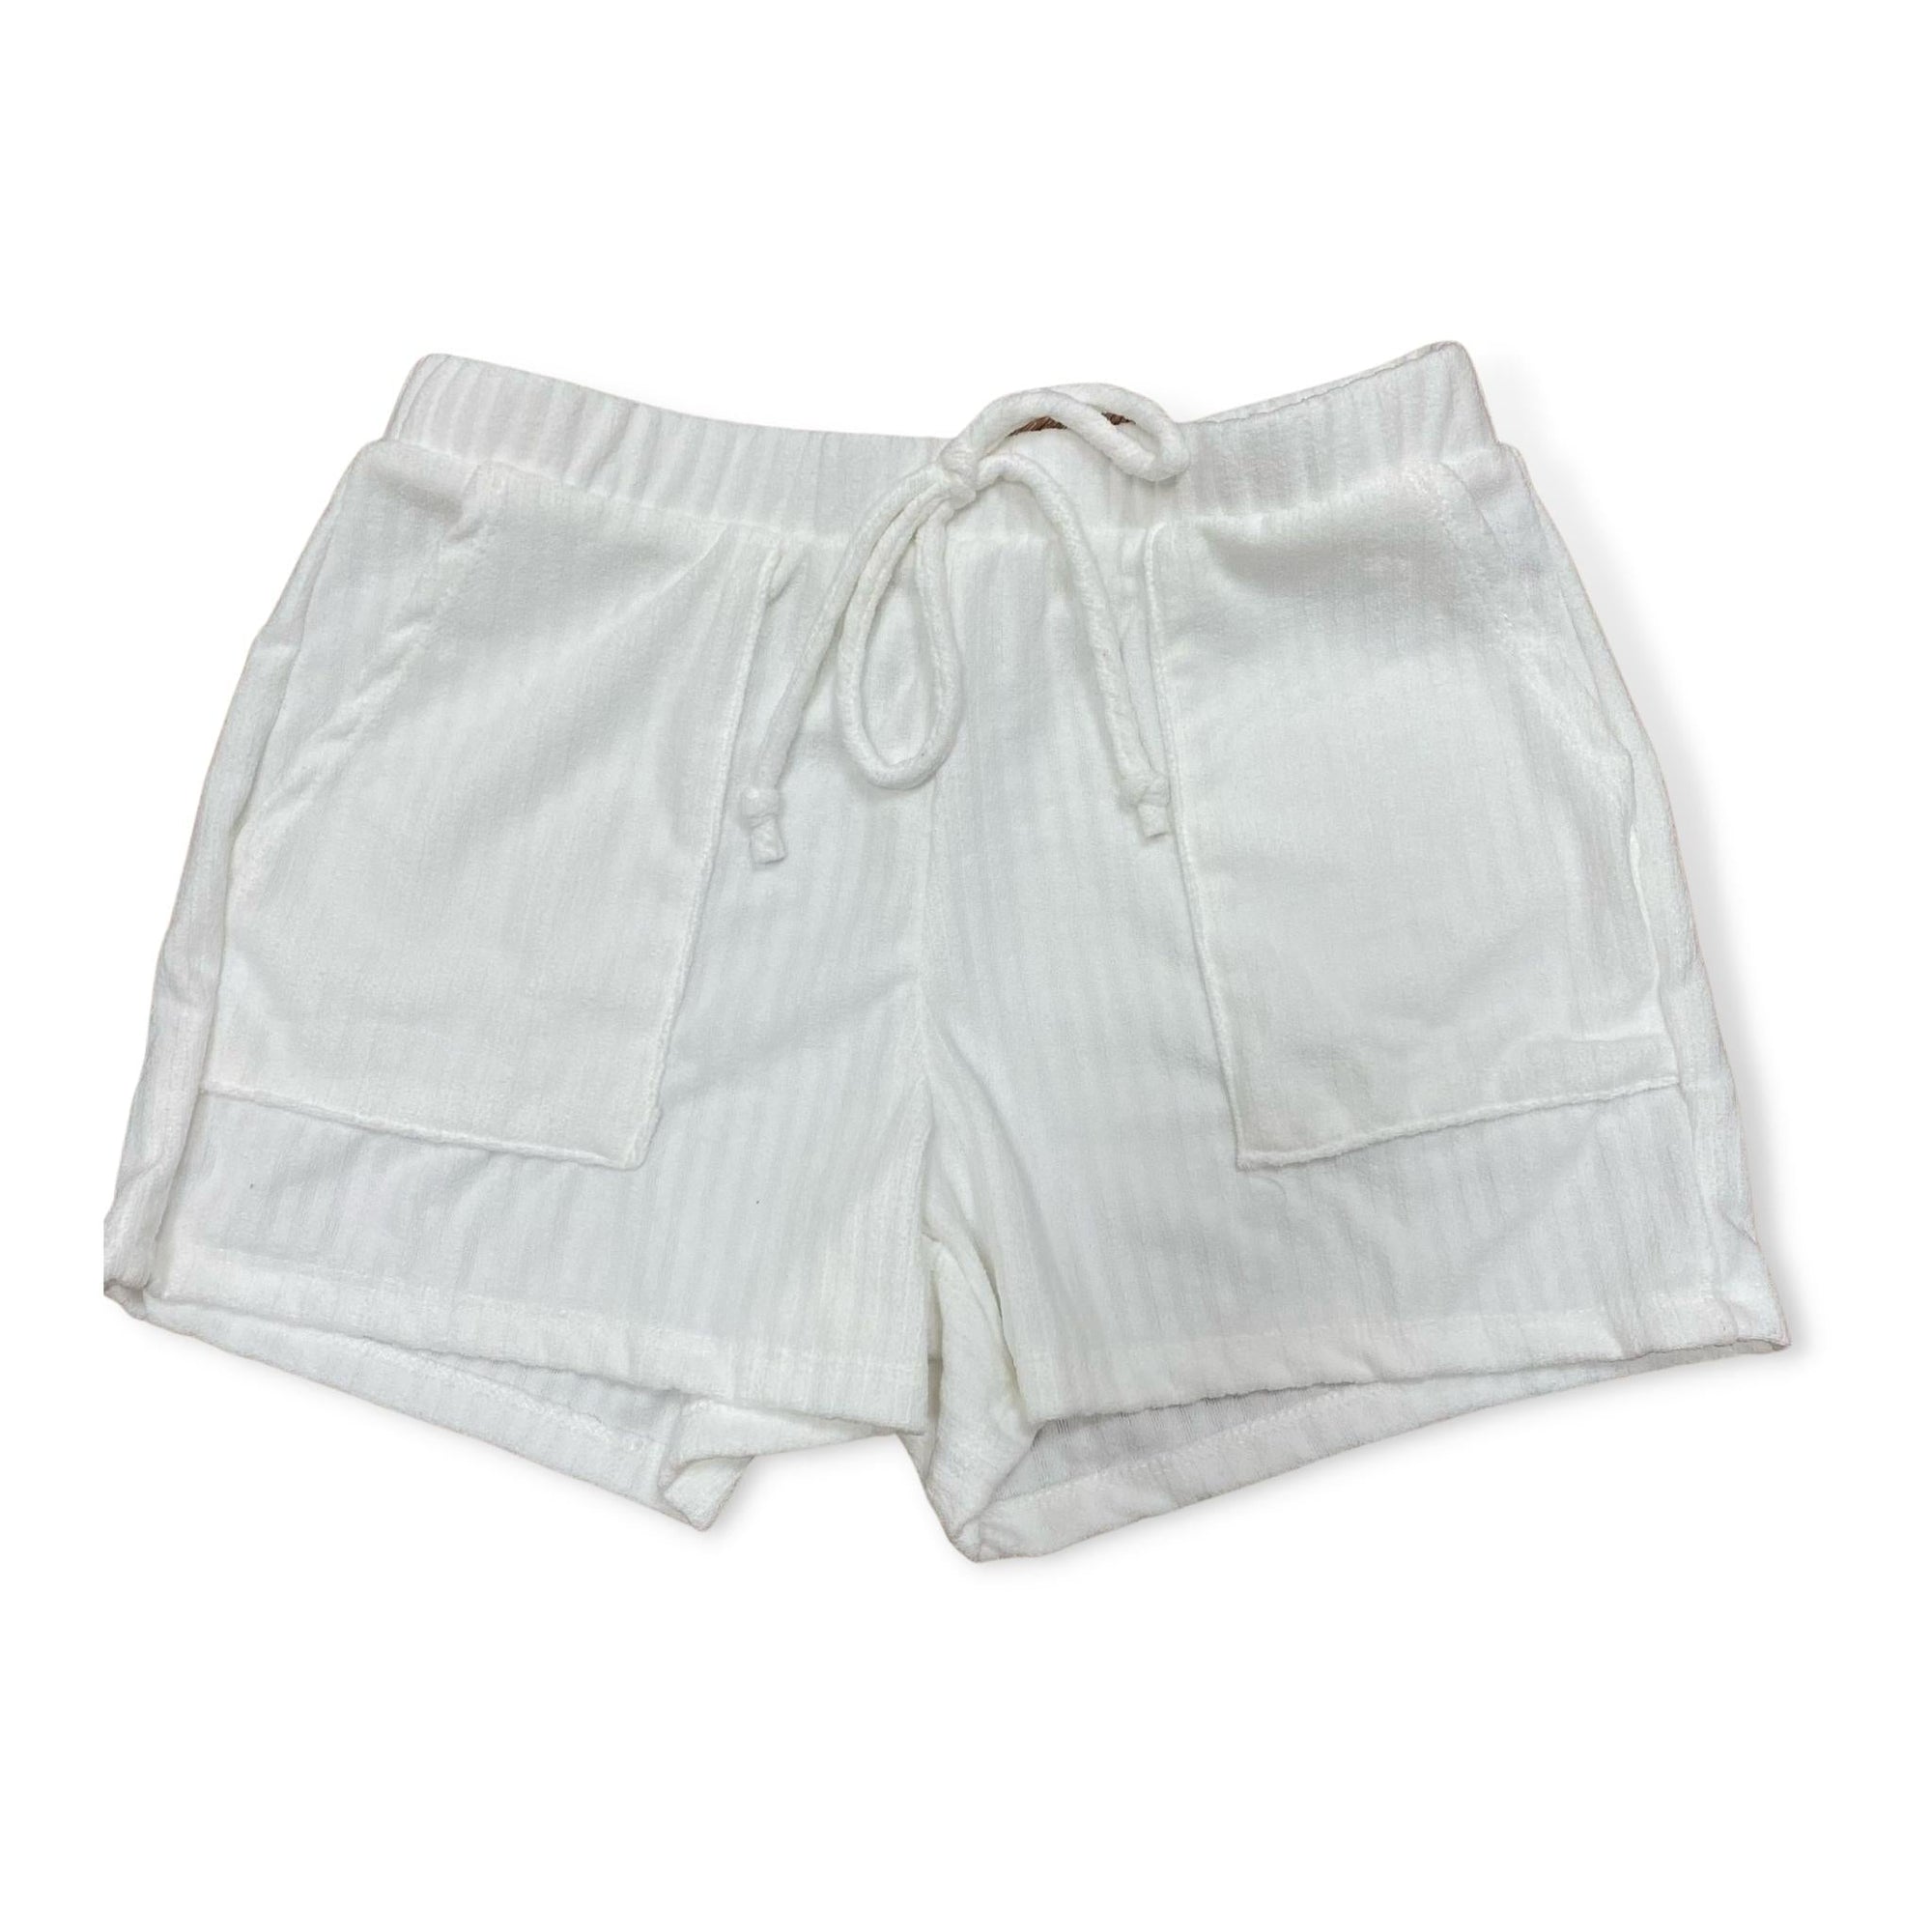 Hashttag Off White Shorts - a Spirit Animal - shorts $30-$60 active Jun 2022 bottoms